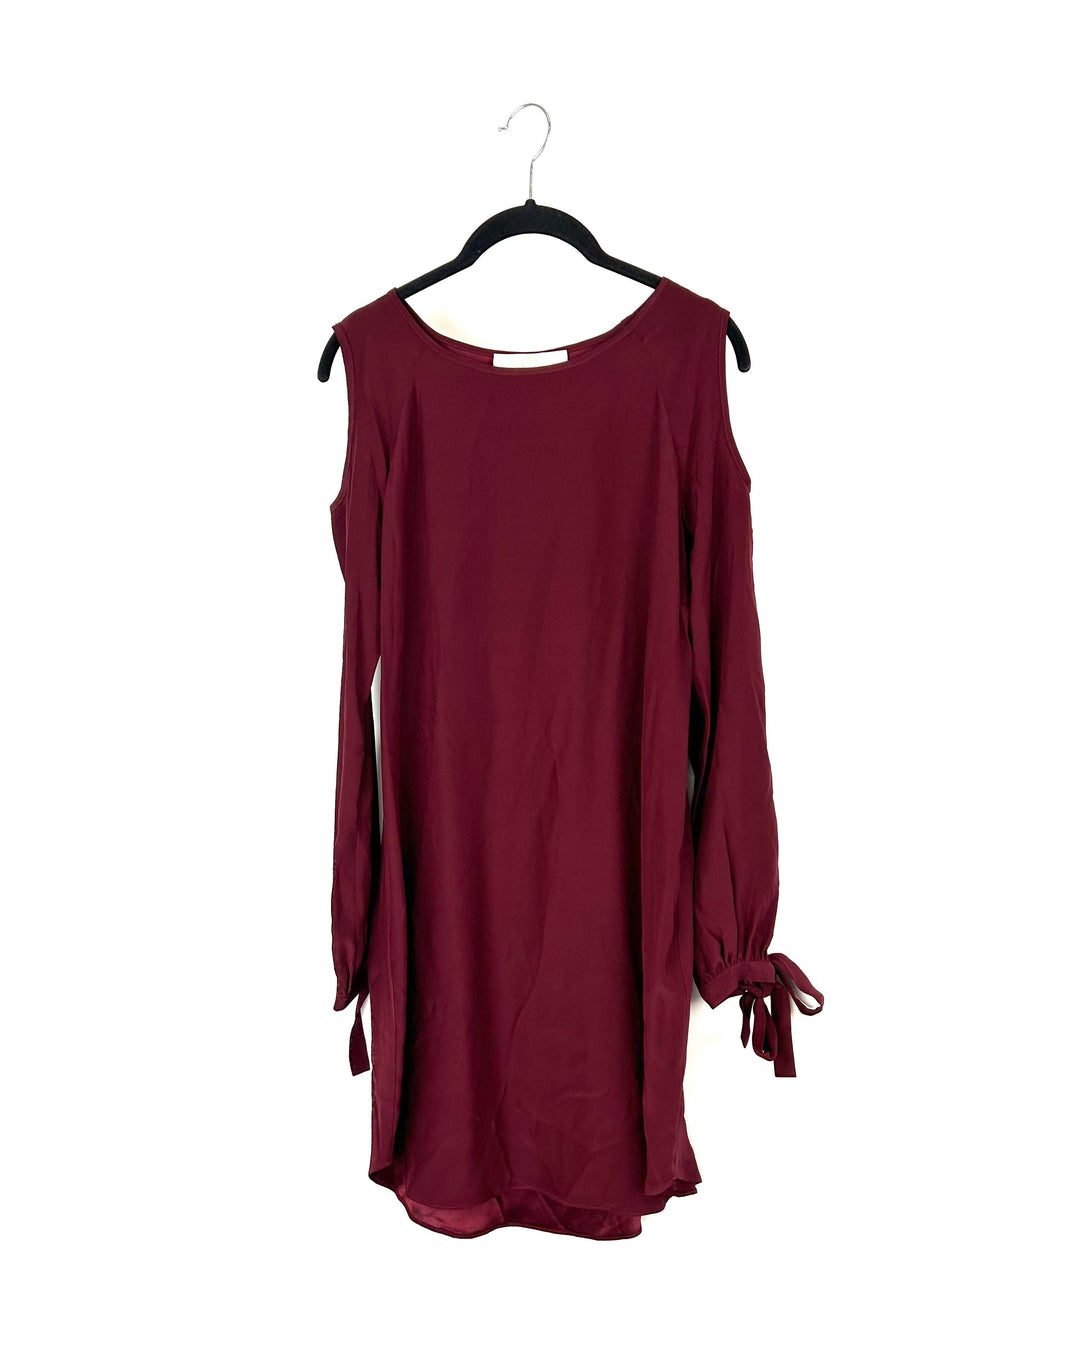 Long Sleeve Burgundy Dress - Size 4-6